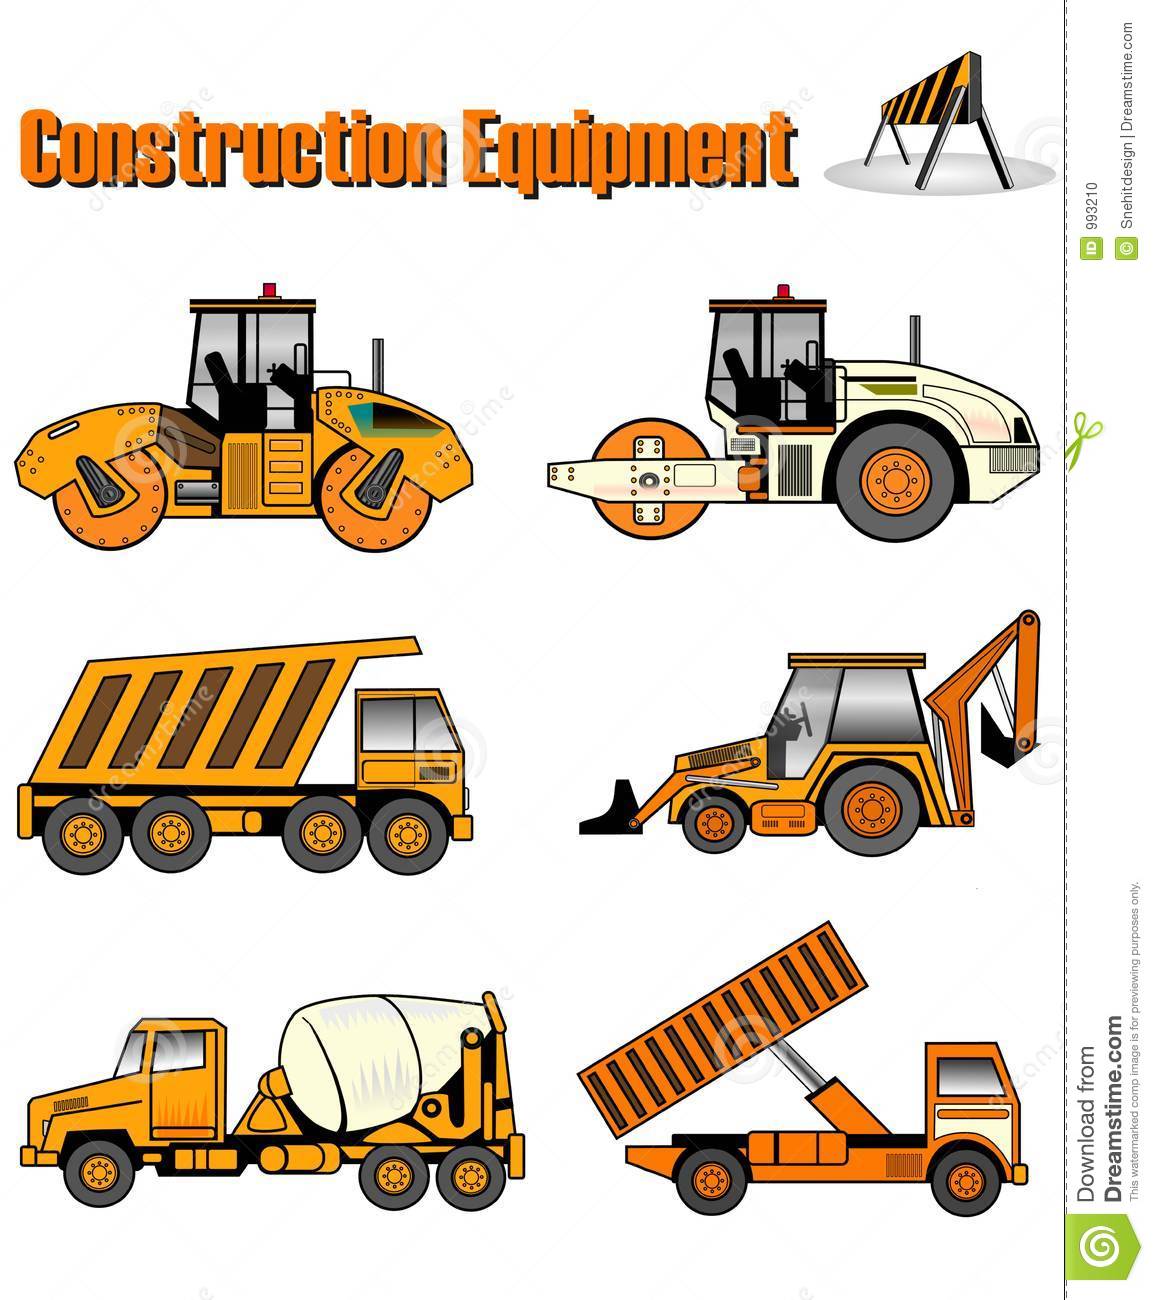 Construction Equipment Stock Photo   Image  993210